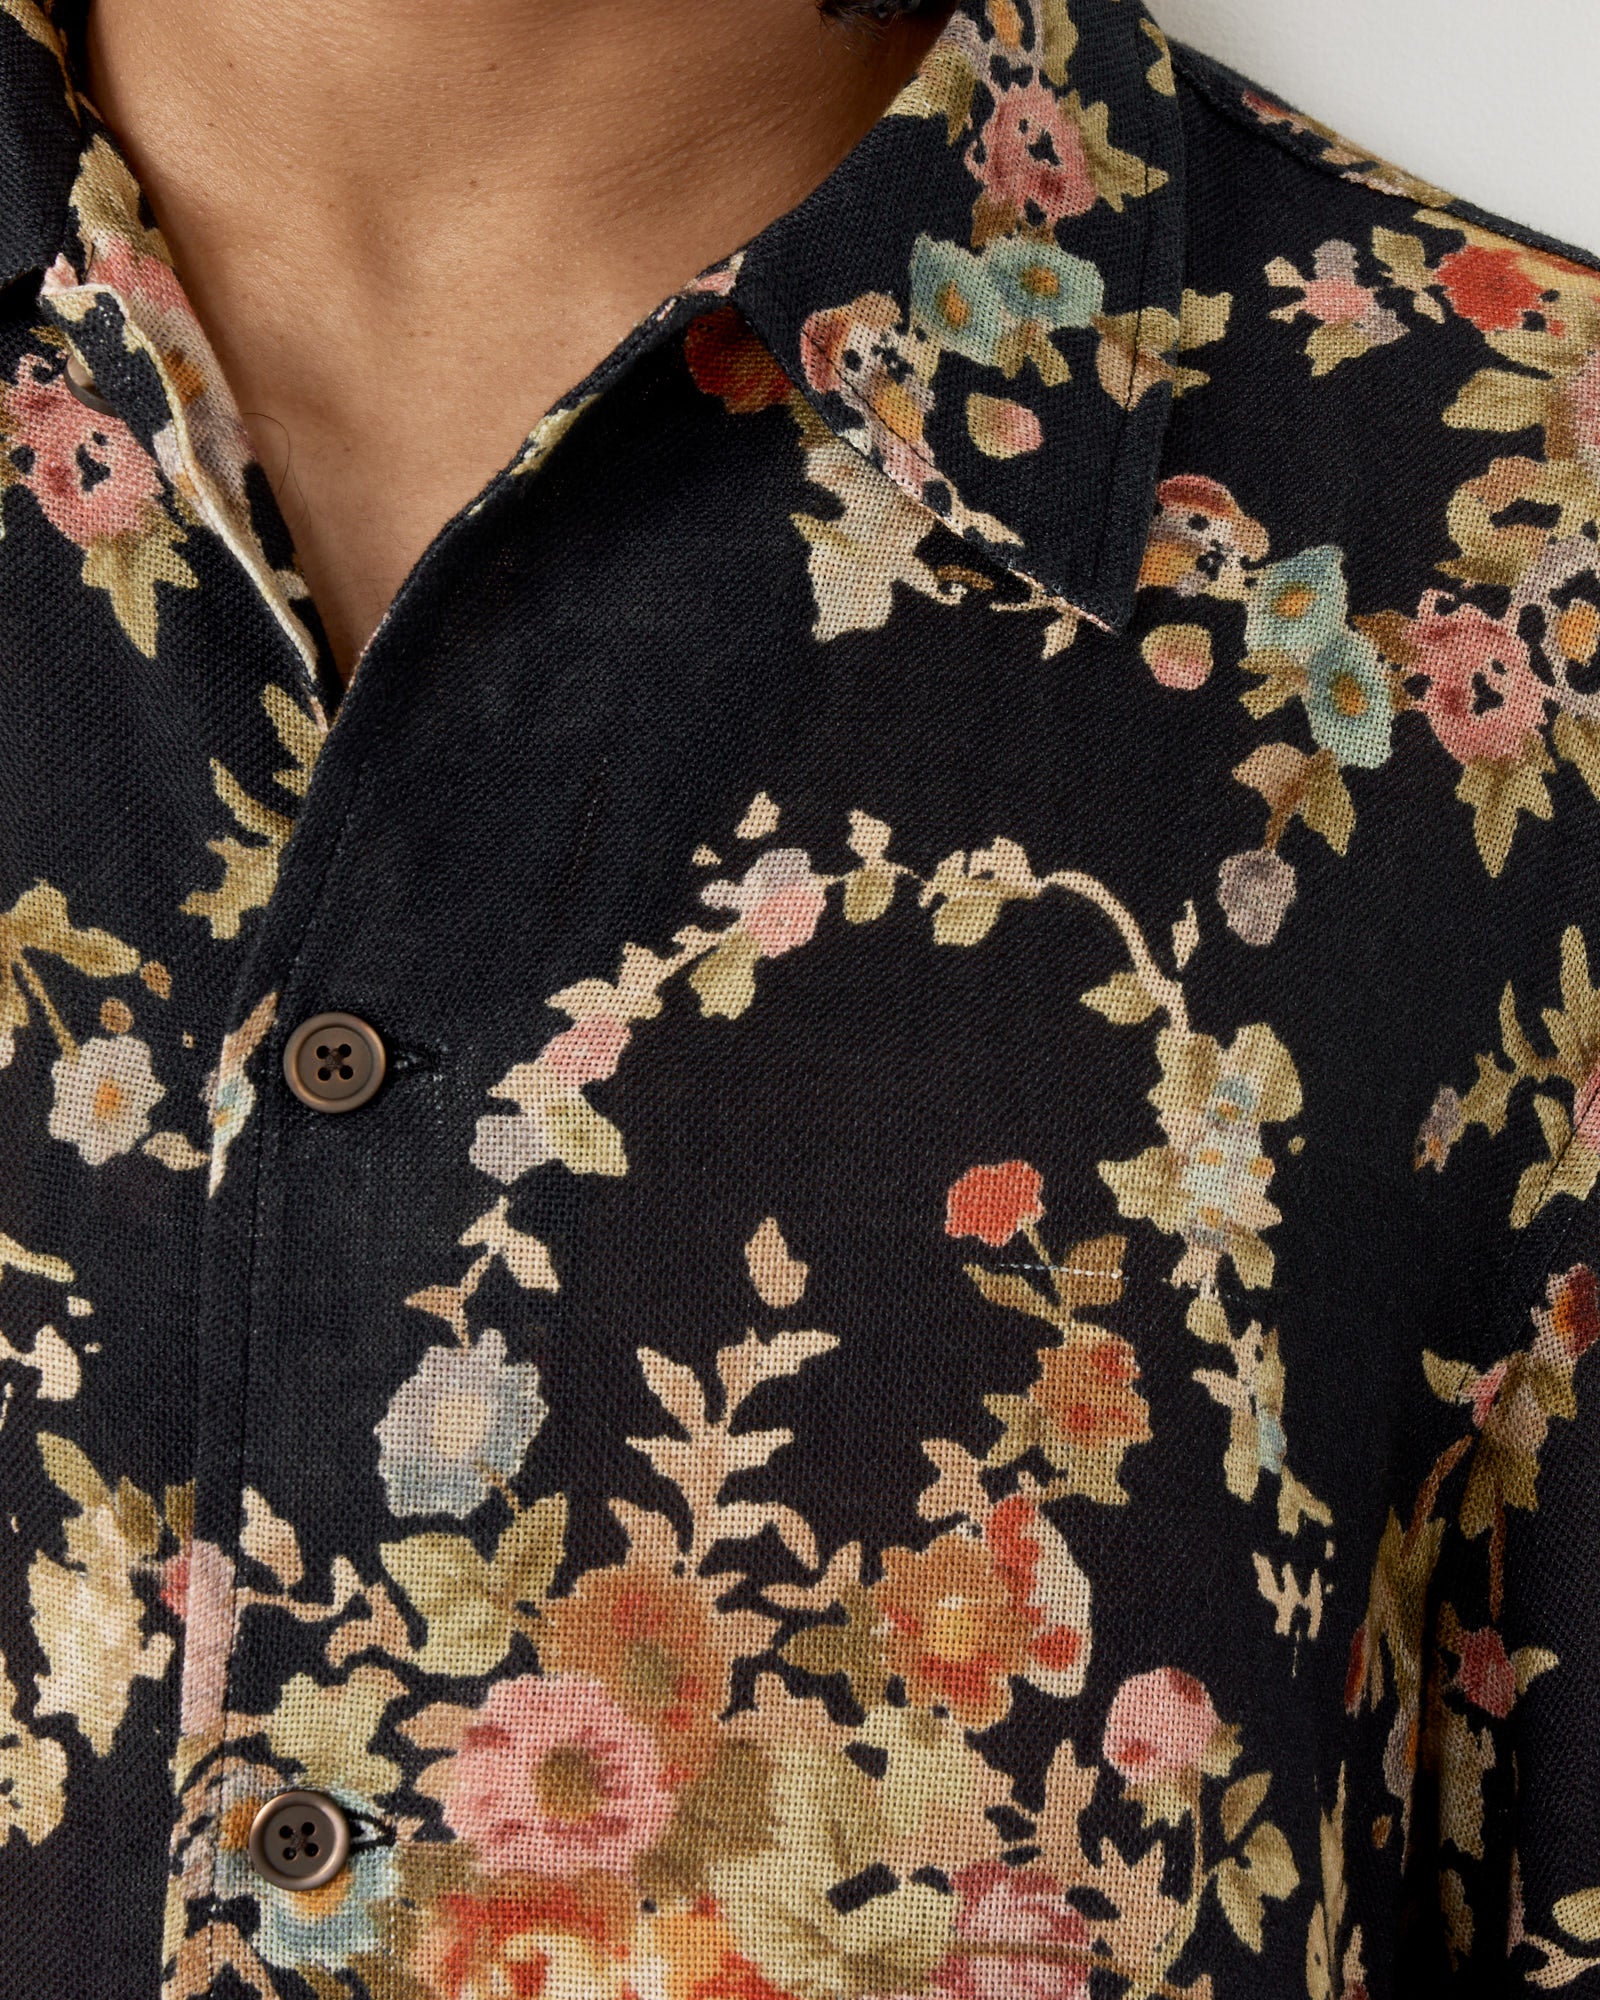 Elder Short Sleeve Shirt in Black Floral Tapestry